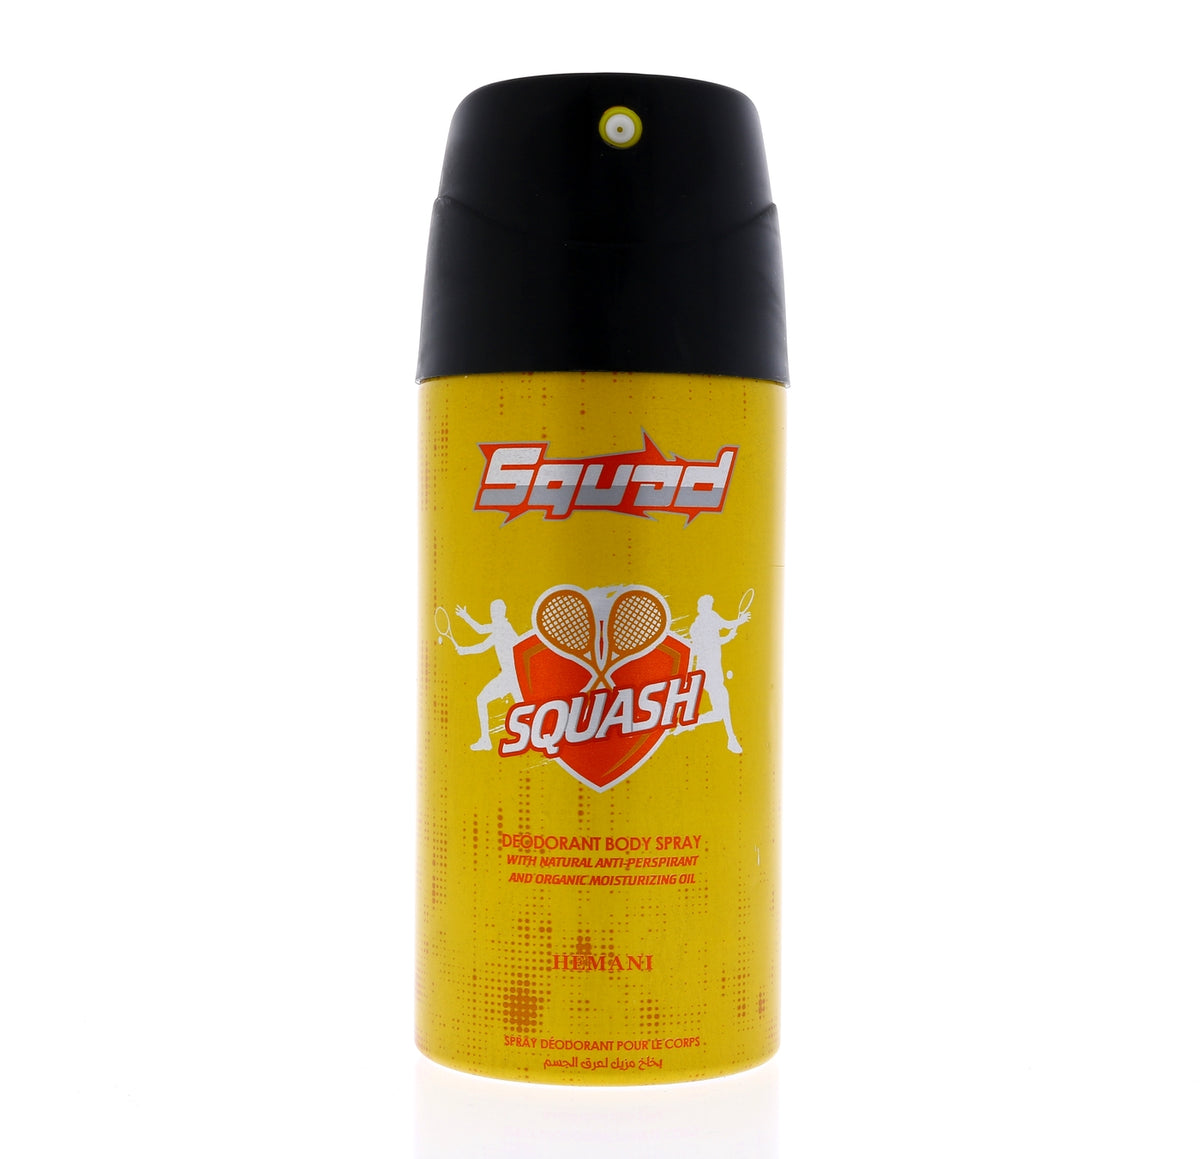 hemani-squad-deodorant-spray-squash-150ml-1